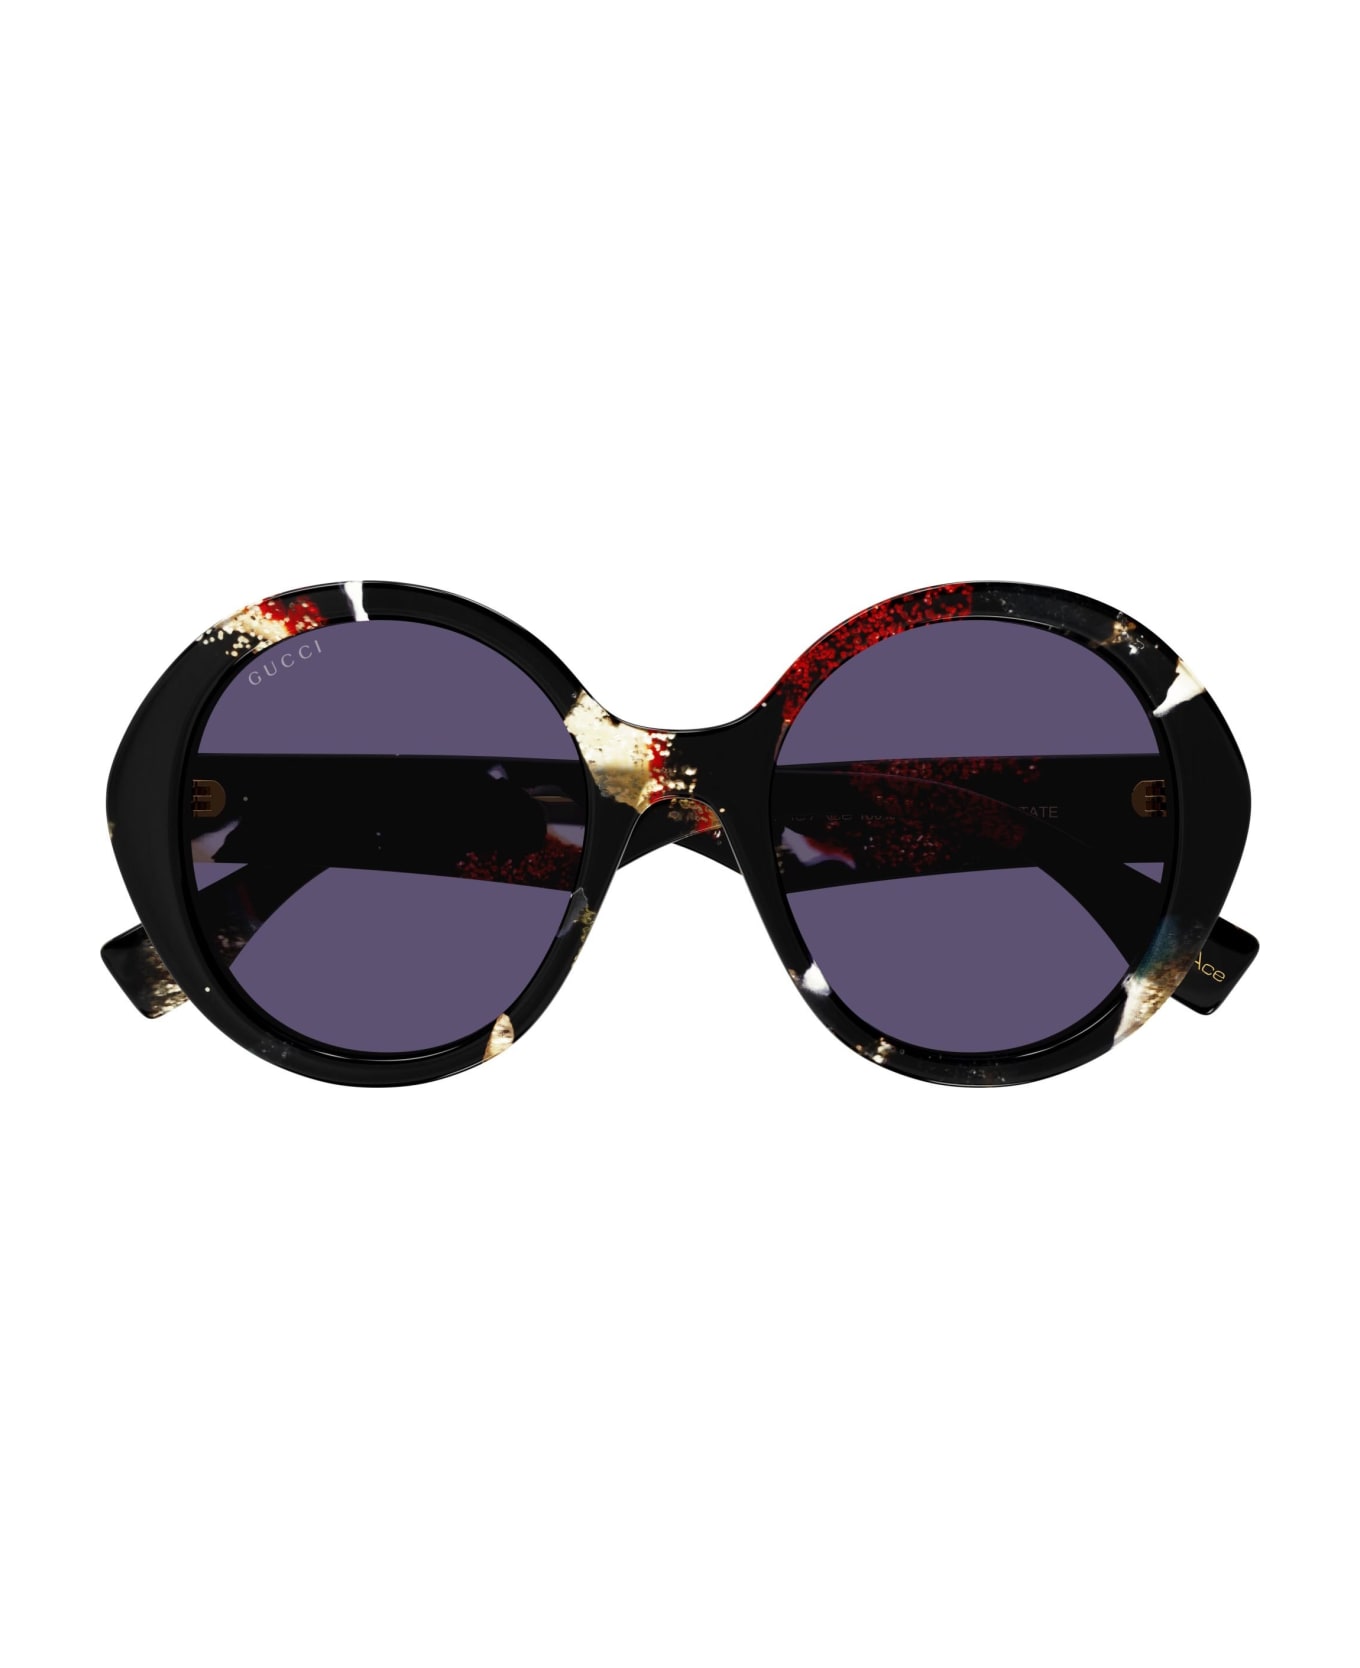 Gucci Eyewear Sunglasses - Nero/Viola